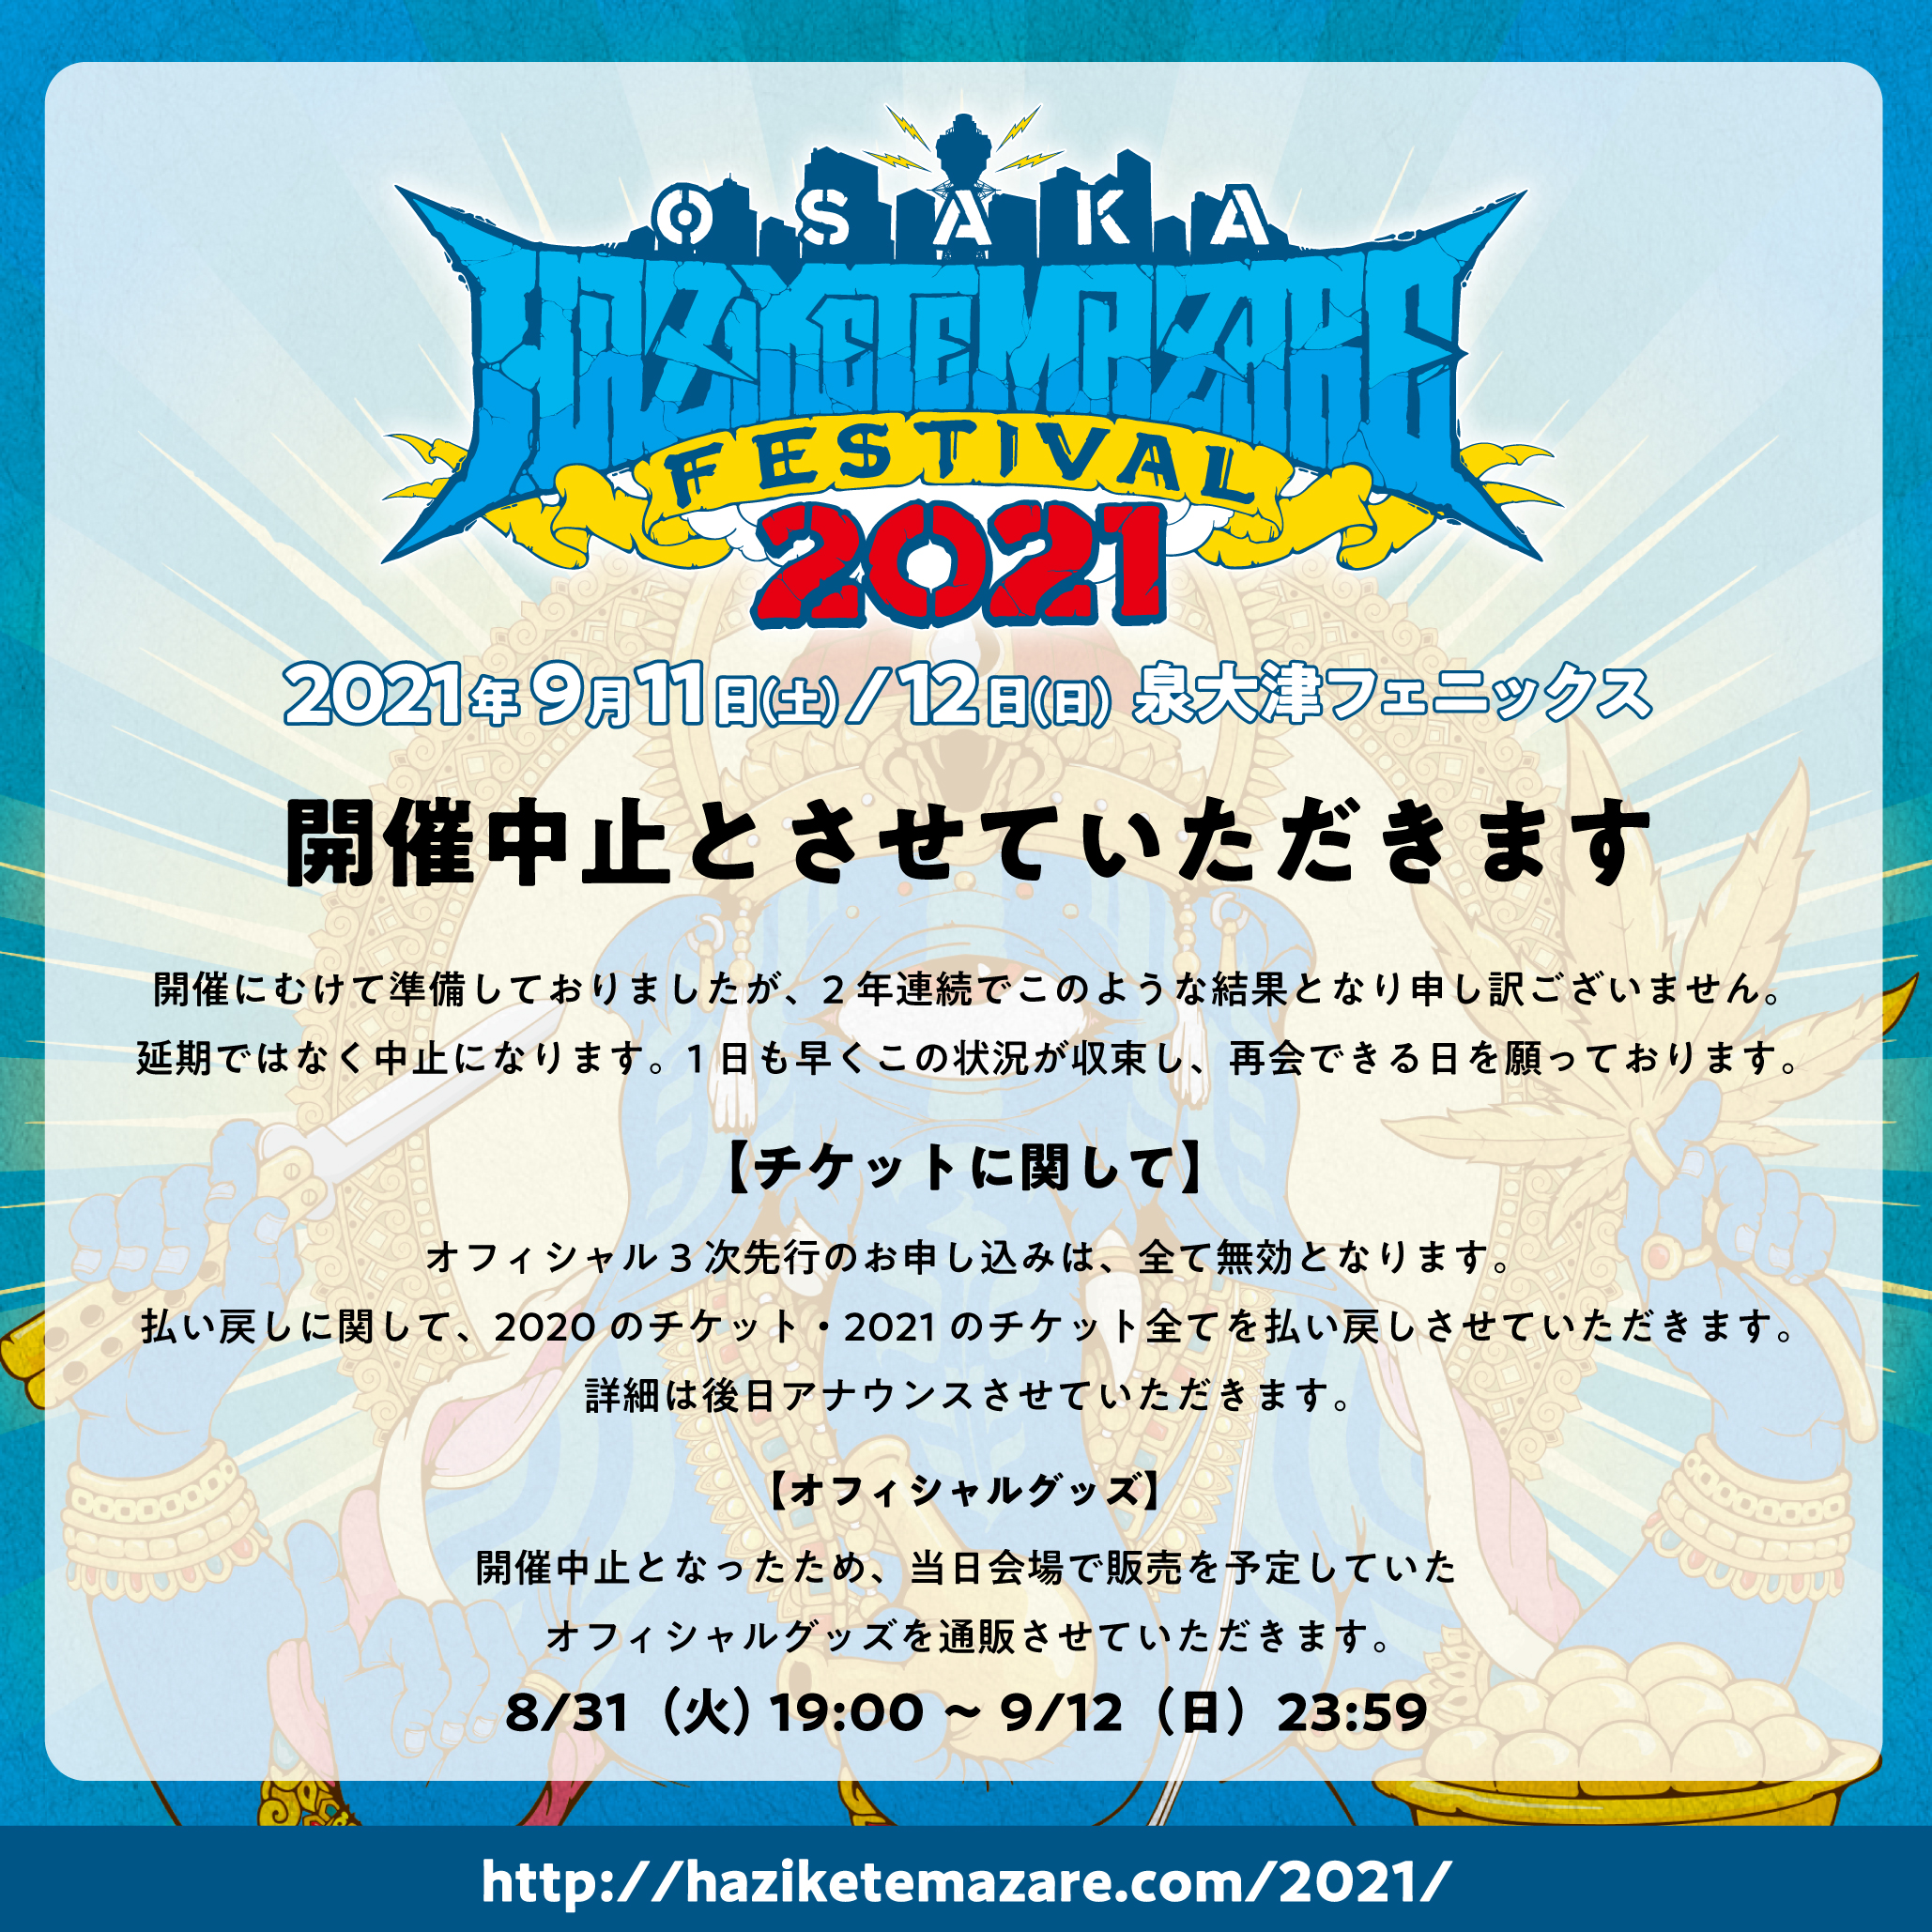 "HAZIKETEMAZARE FESTIVAL 2021" 開催中止のお知らせ